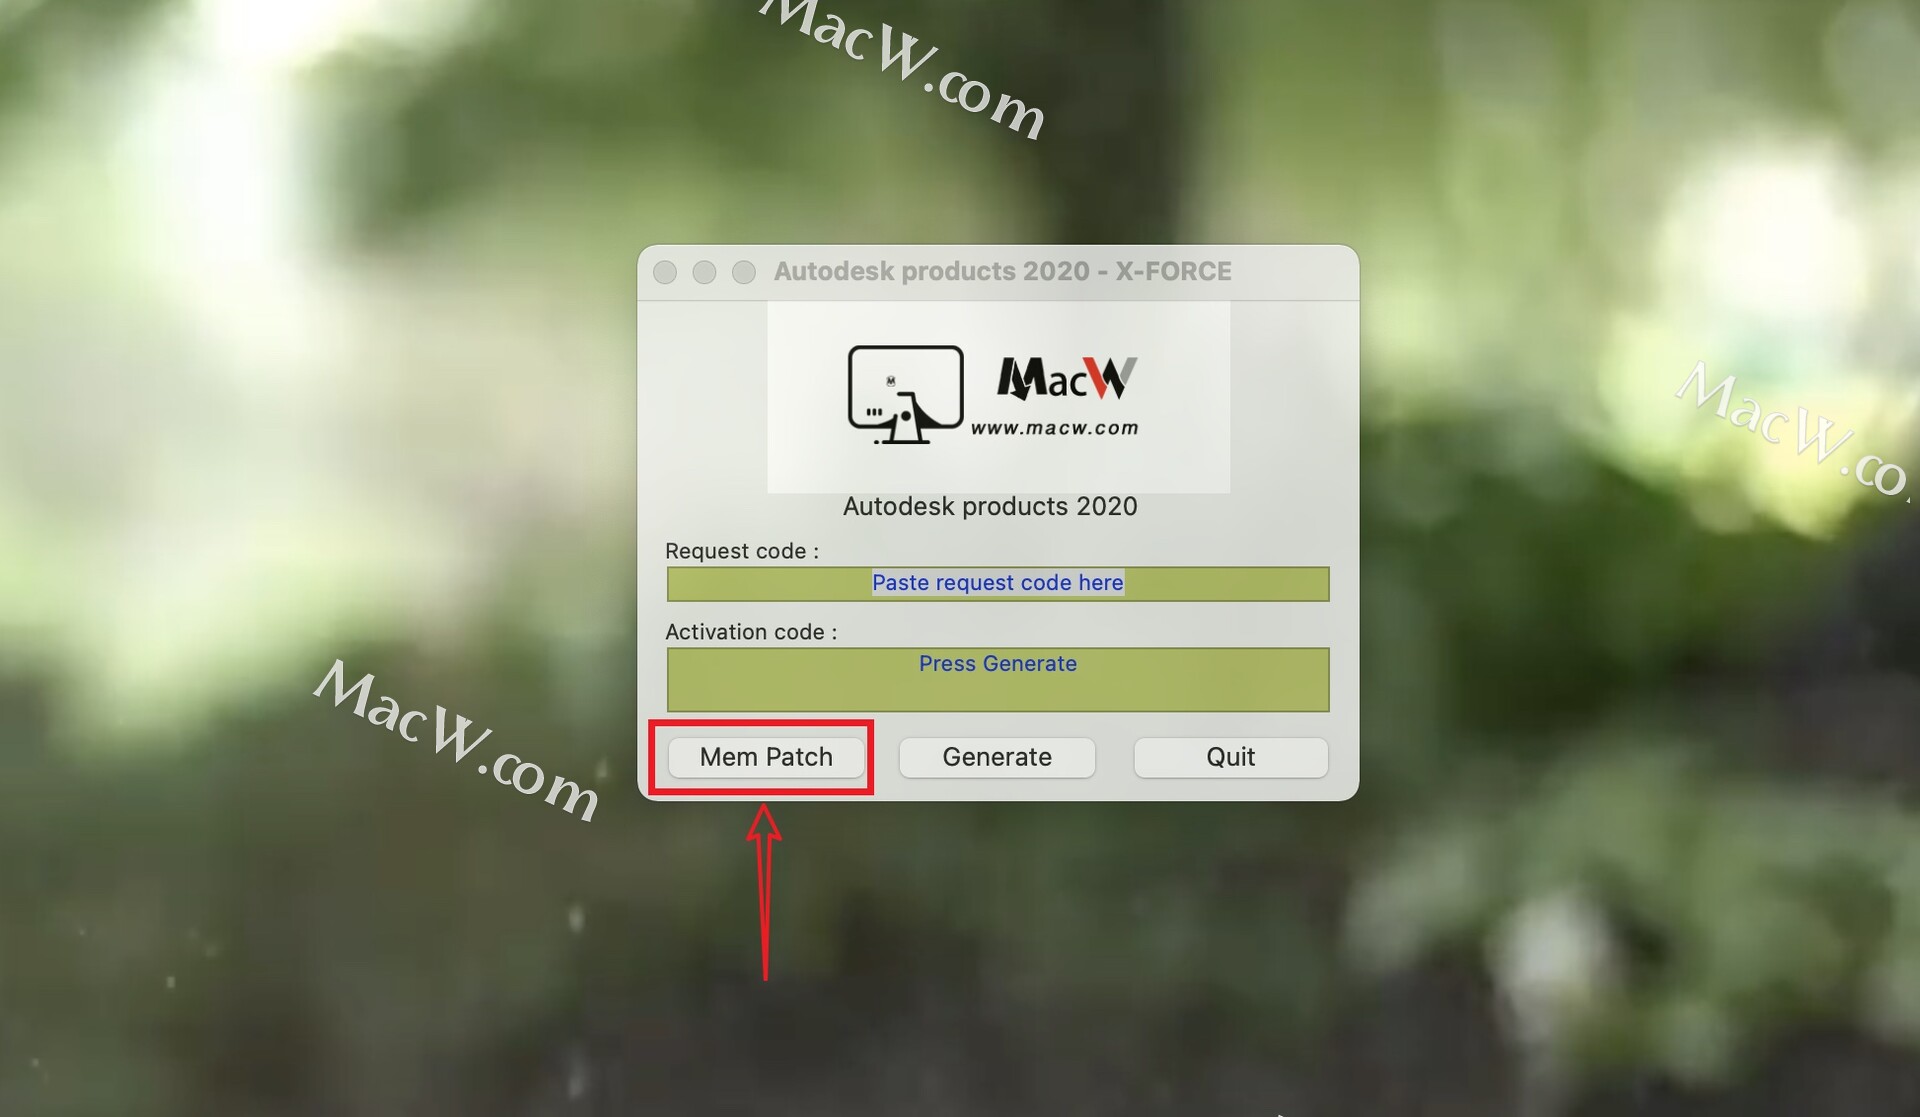 Mac版cad2024发布 AutoCAD 2024安装教程